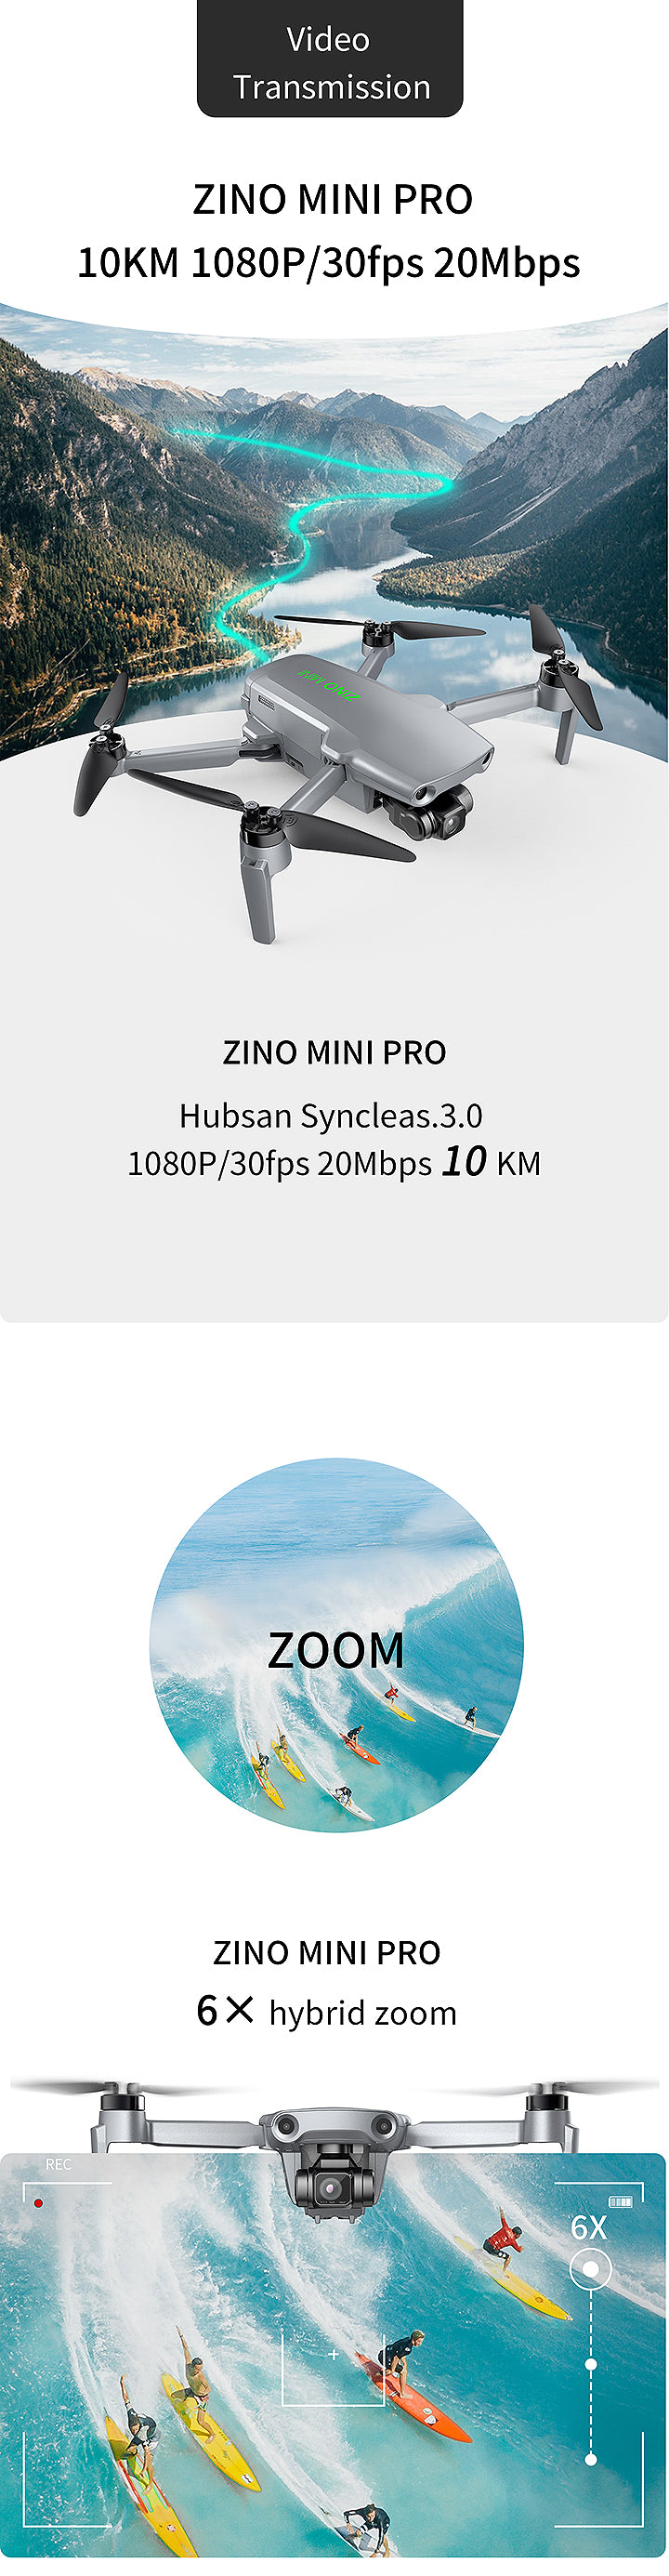 HUBSAN ZINO MINI PRO DRONE 64GB - CARD ONE BATTERY